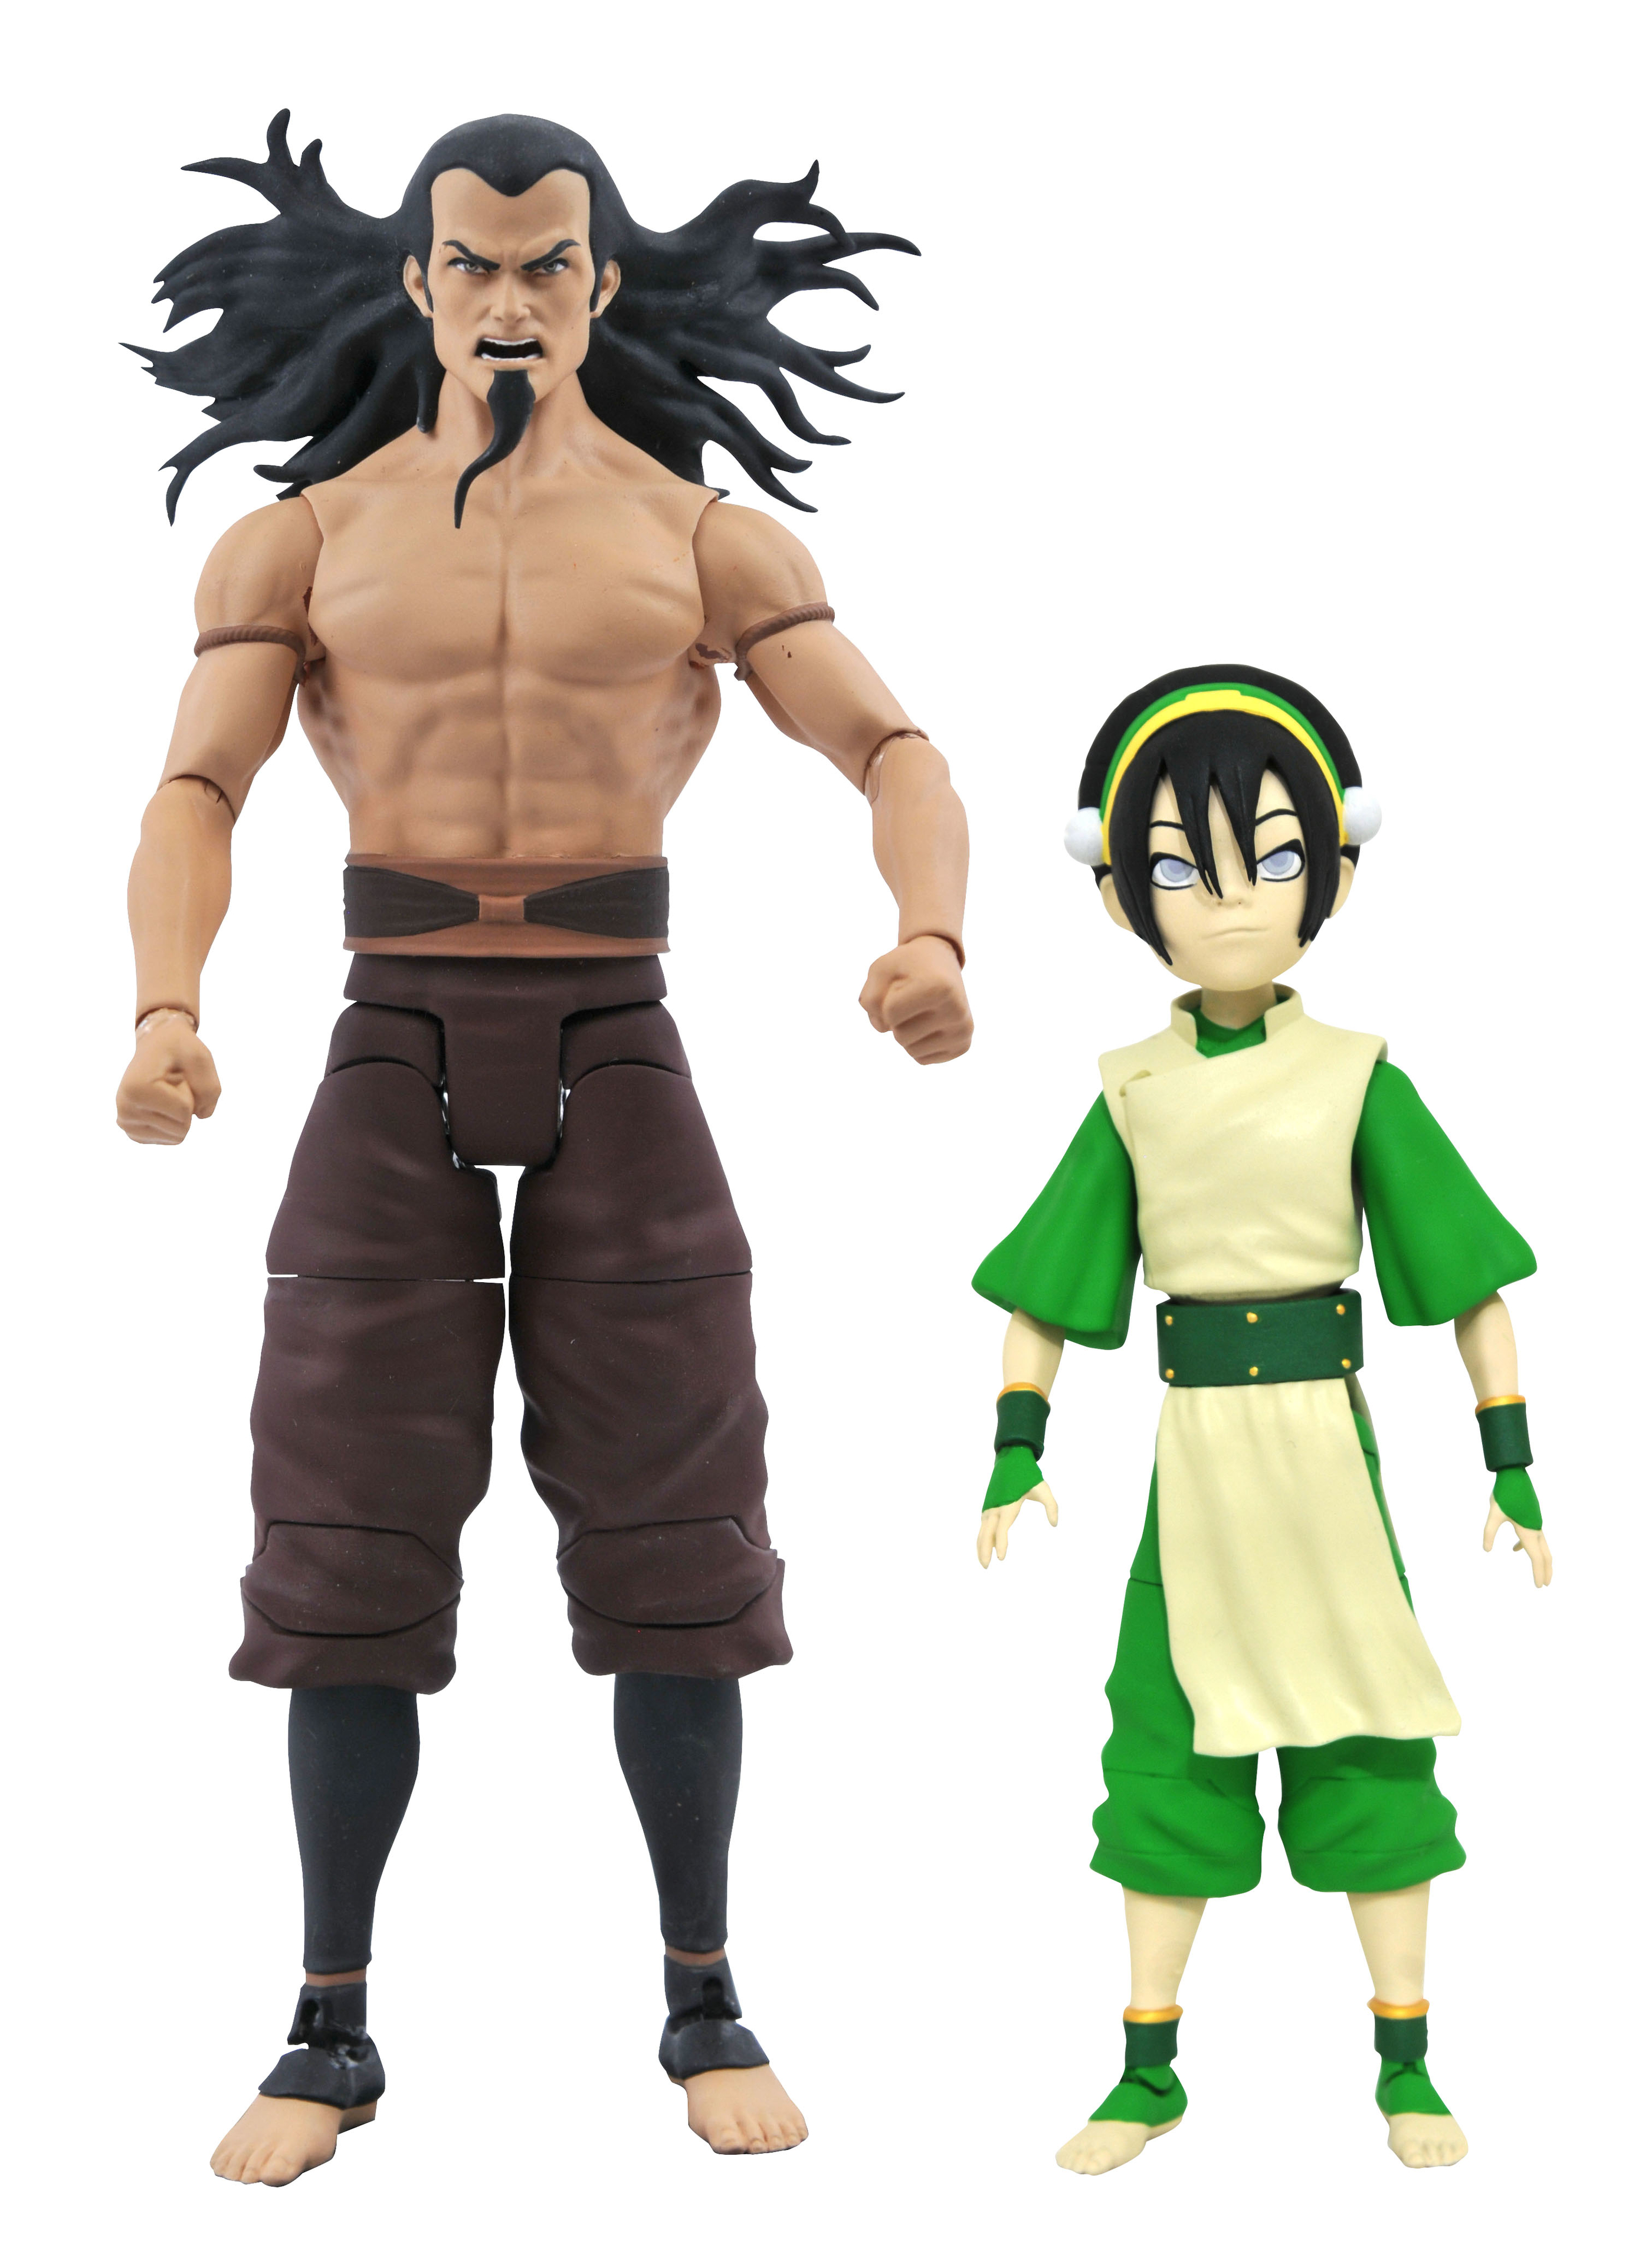 Avatar Series 3 Deluxe Action Figure Assortment